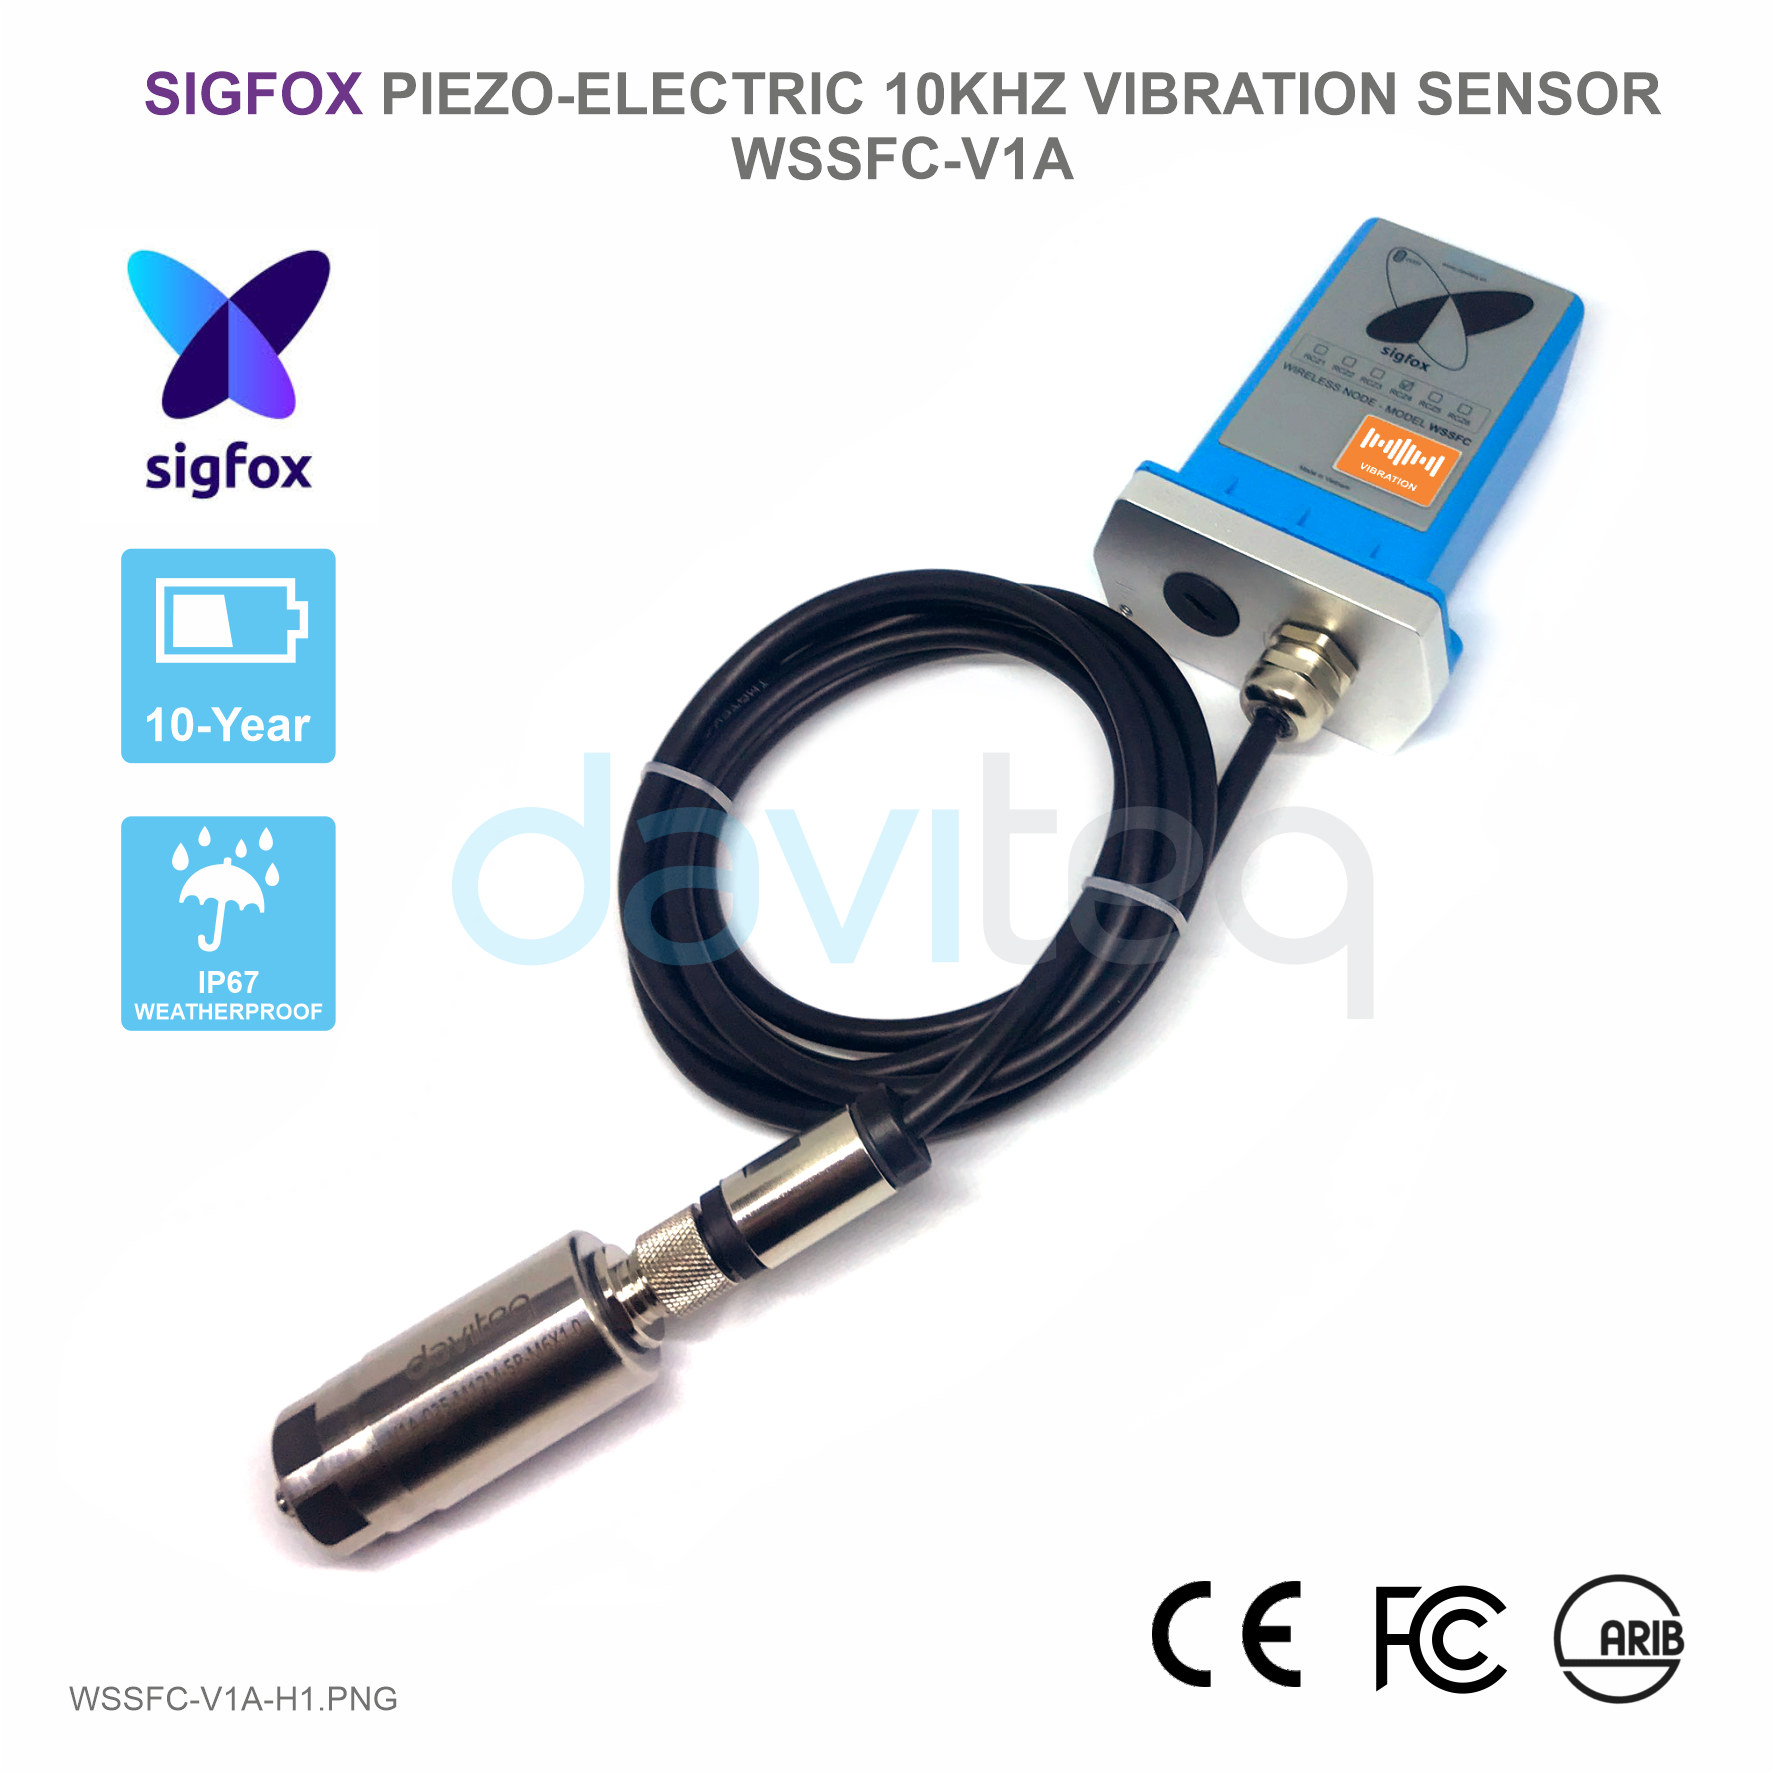 Cảm biến Sigfox đo rung loại Piezo-Electric 10KHz